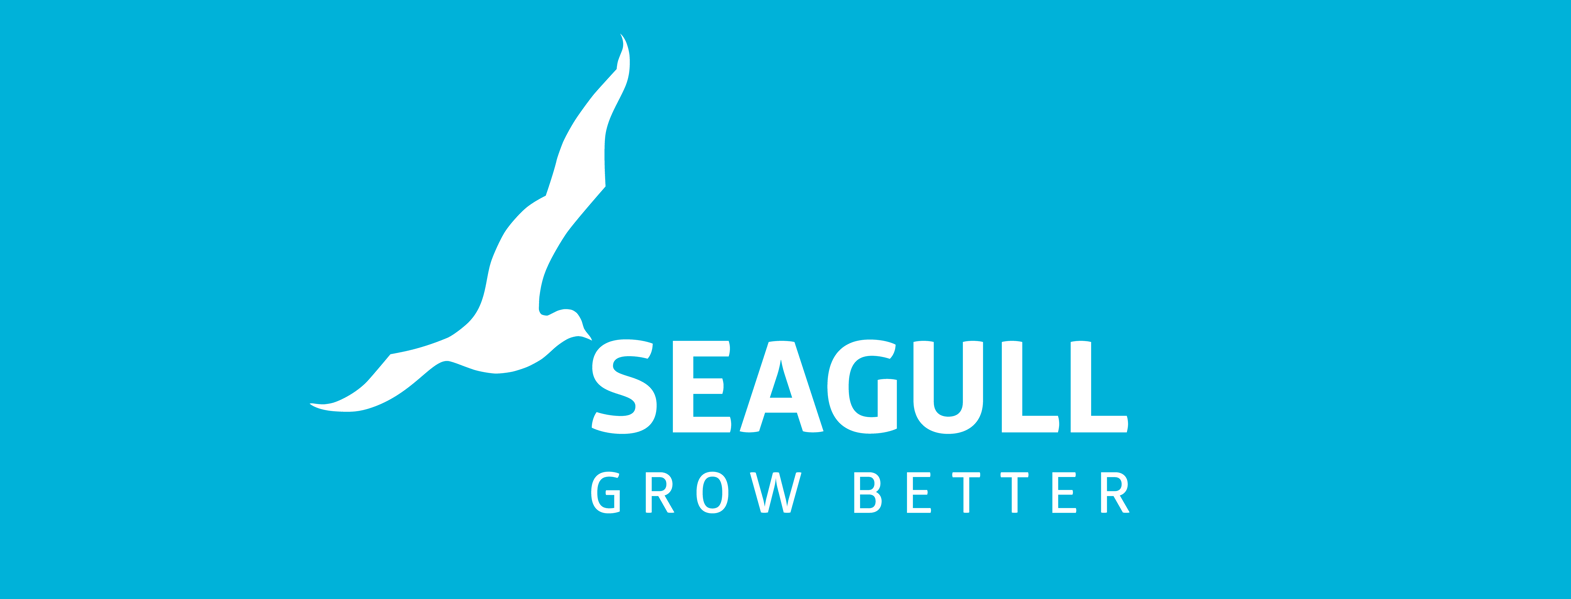 Seagull logo - blue background-2